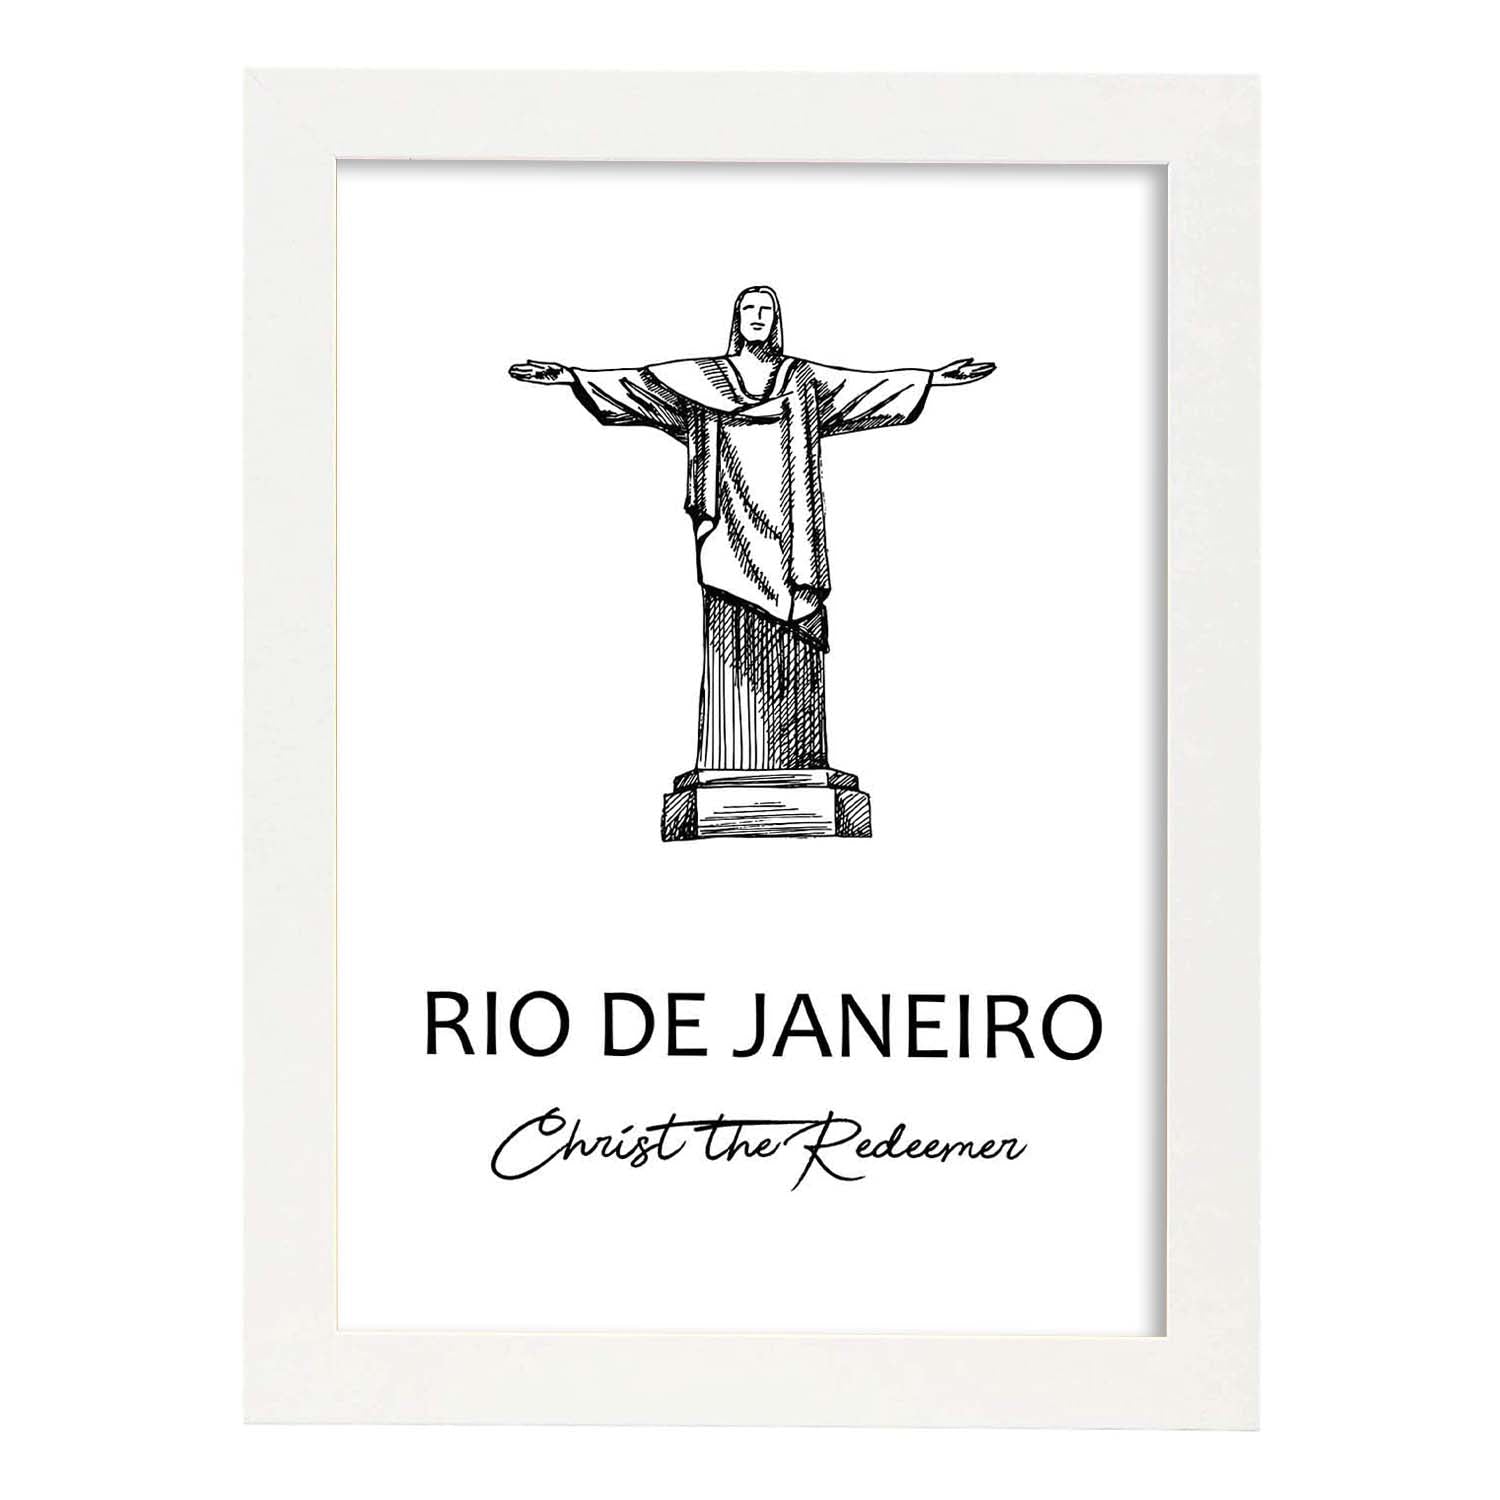 Poster de Rio de Janeiro - Cristo redentor. Láminas con monumentos de ciudades.-Artwork-Nacnic-A3-Marco Blanco-Nacnic Estudio SL